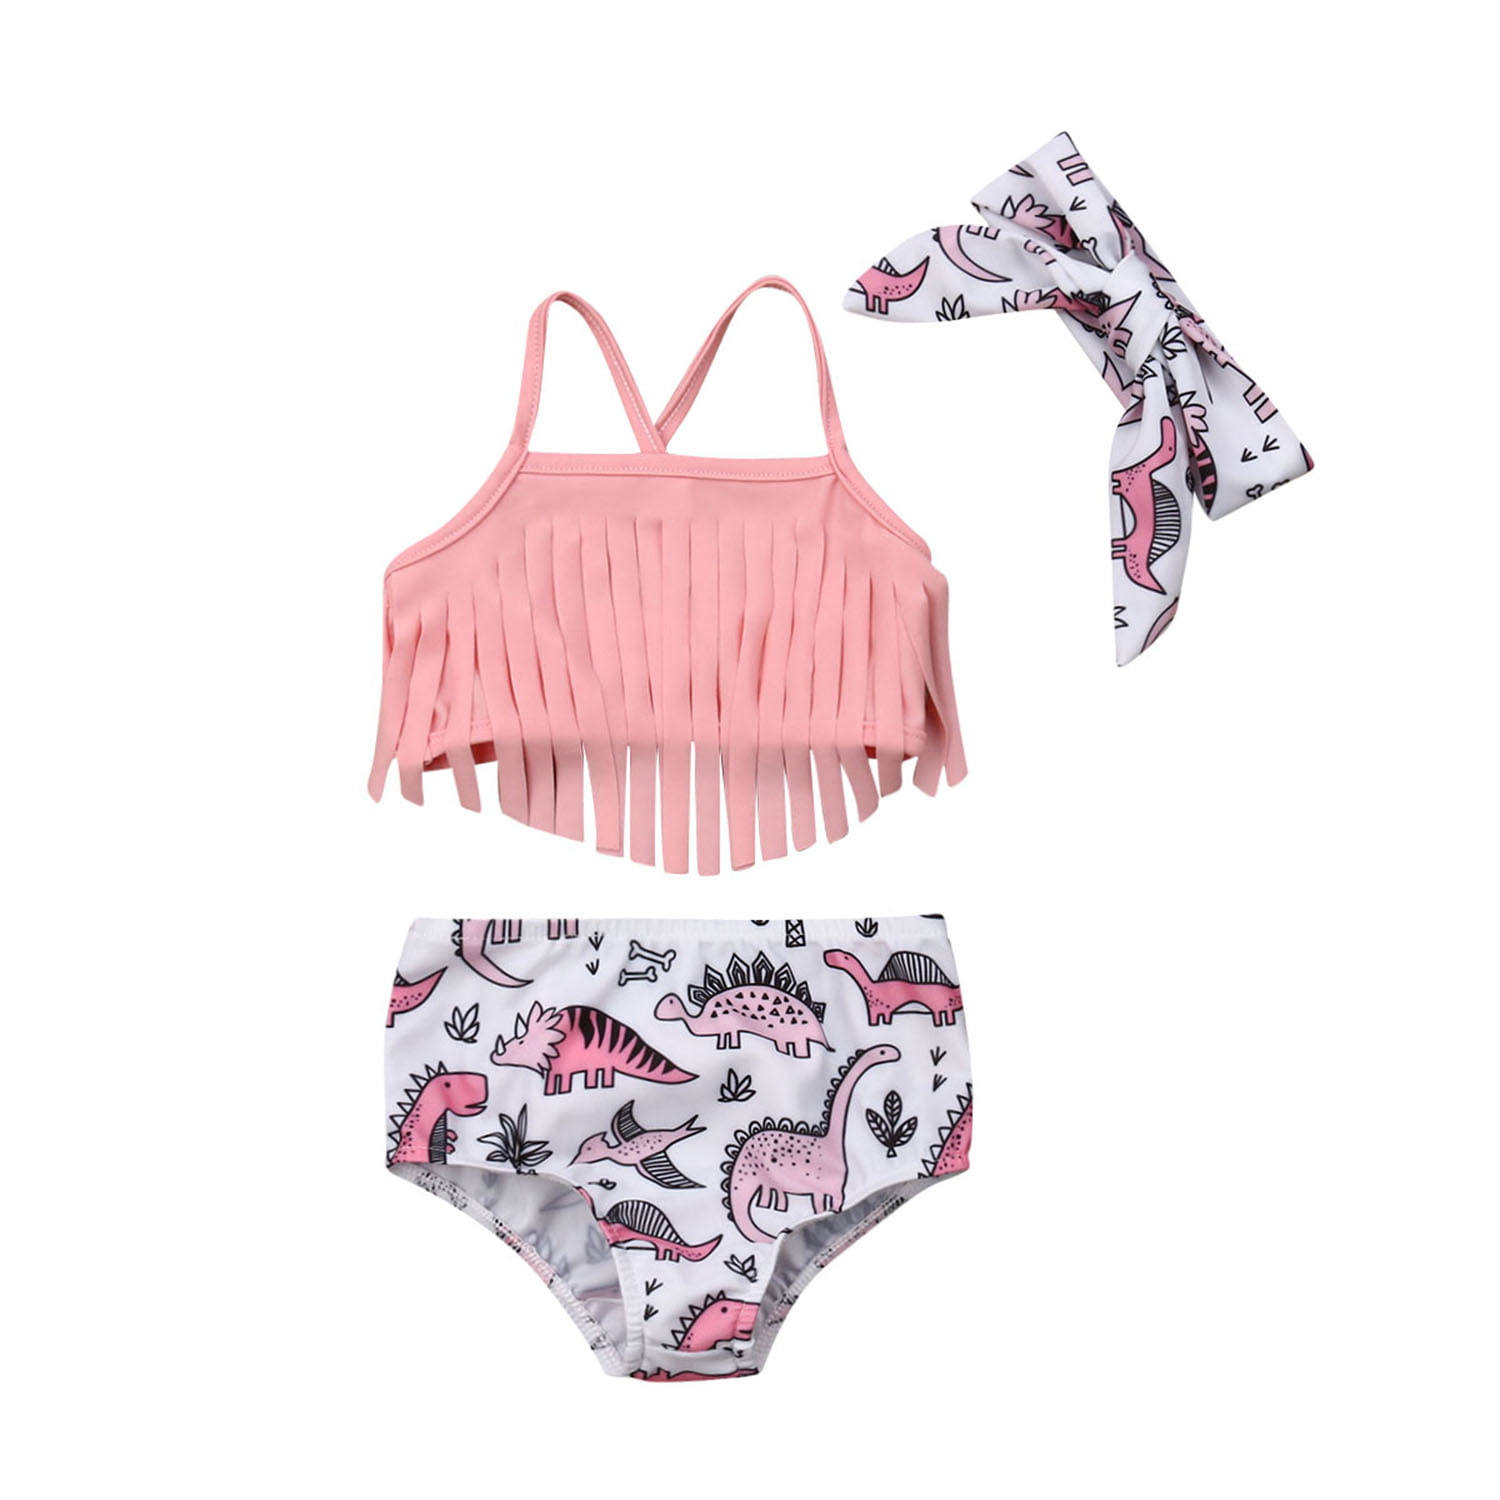 DQCUTE Infant Baby Girl Tassel Floral Bikini Set Swimsuit Summer Swimwear Bathing Suits Beachwear with Headband 